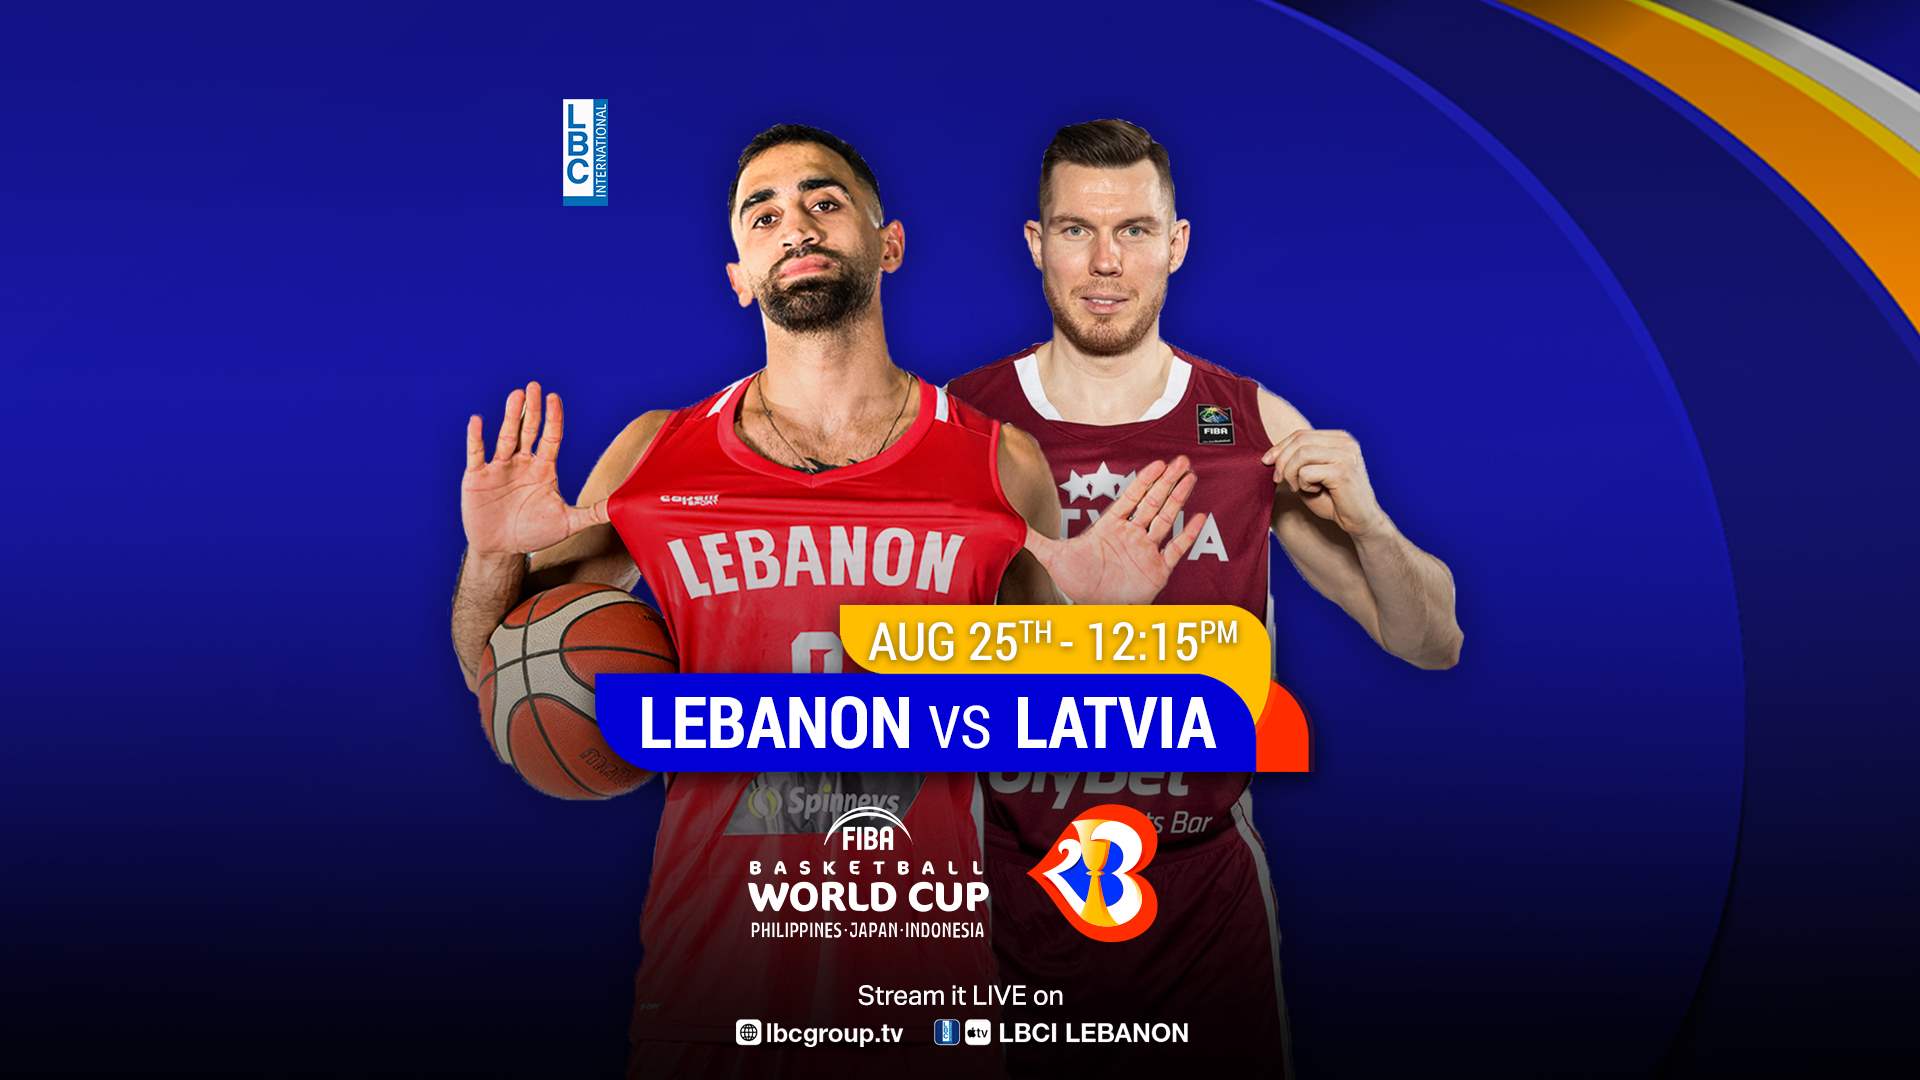 Tip off Alert! Lebanon vs Latvia in the FIBA Basketball World Cup at 1210 PM